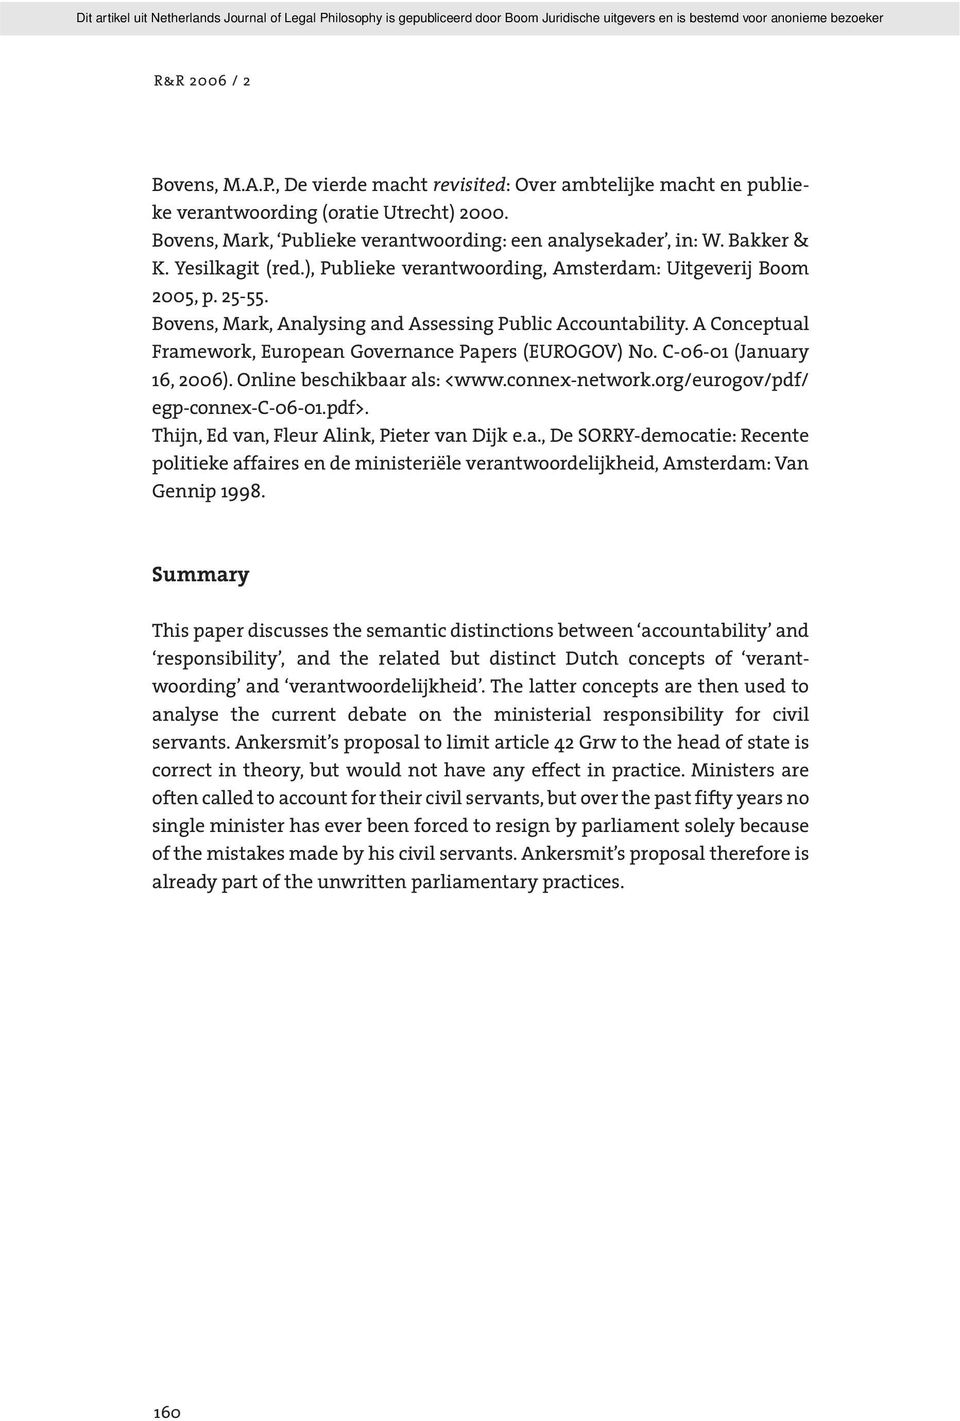 A Conceptual Framework, European Governance Papers (EUROGOV) No. C-06-01 (January 16, 2006). Online beschikbaar als: <www.connex-network.org/eurogov/pdf/ egp-connex-c-06-01.pdf>.